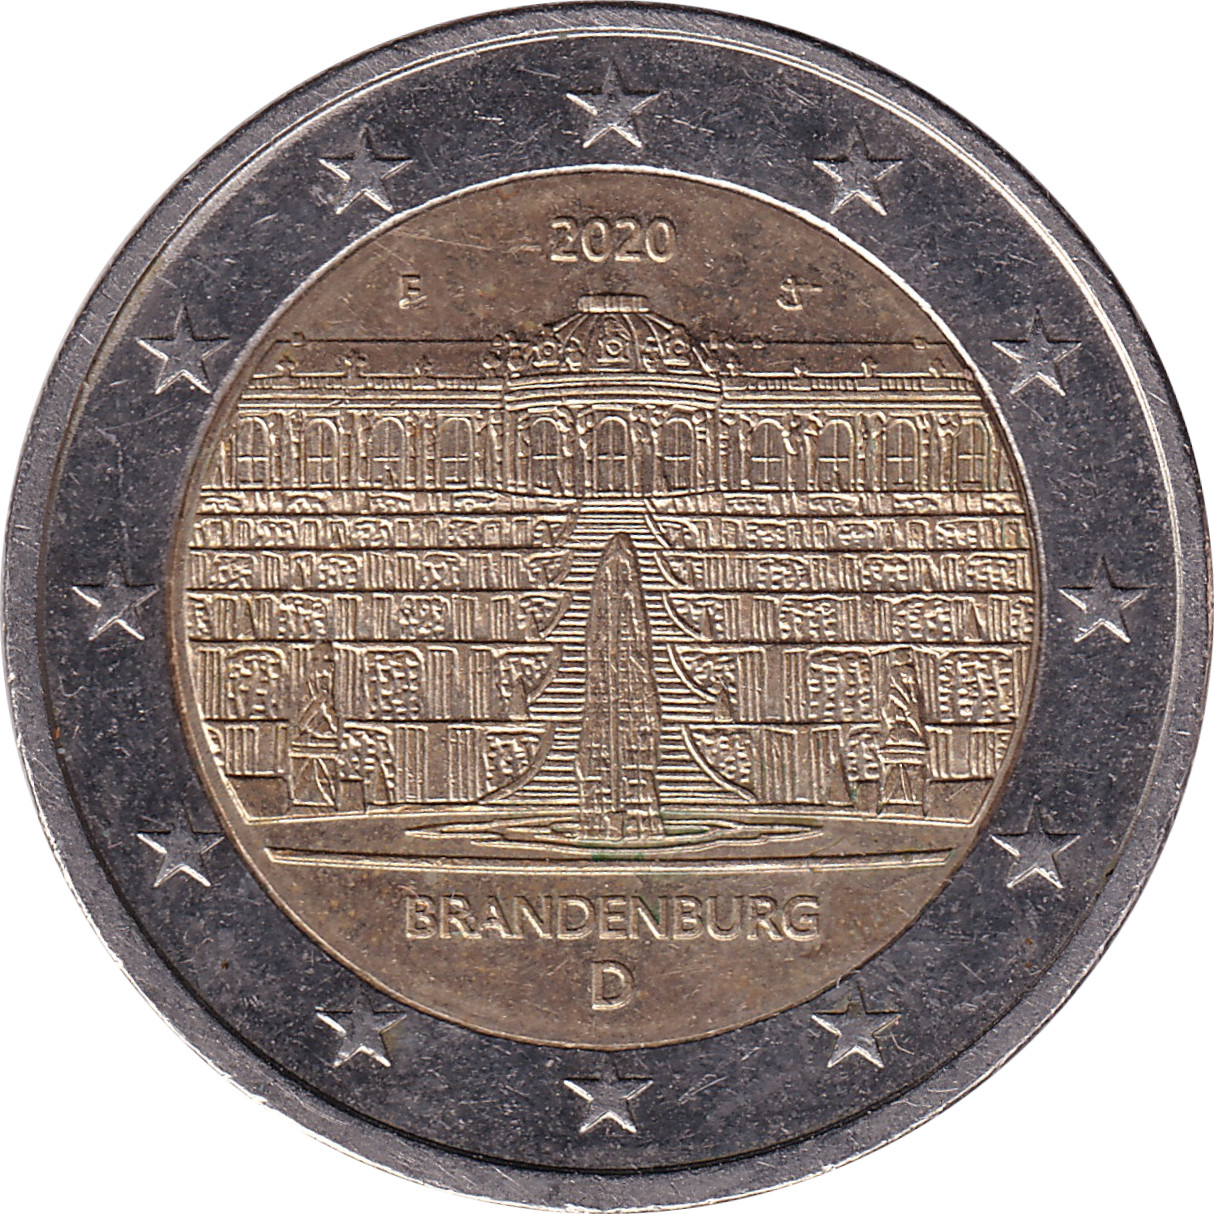 2 euro - Brandeburg